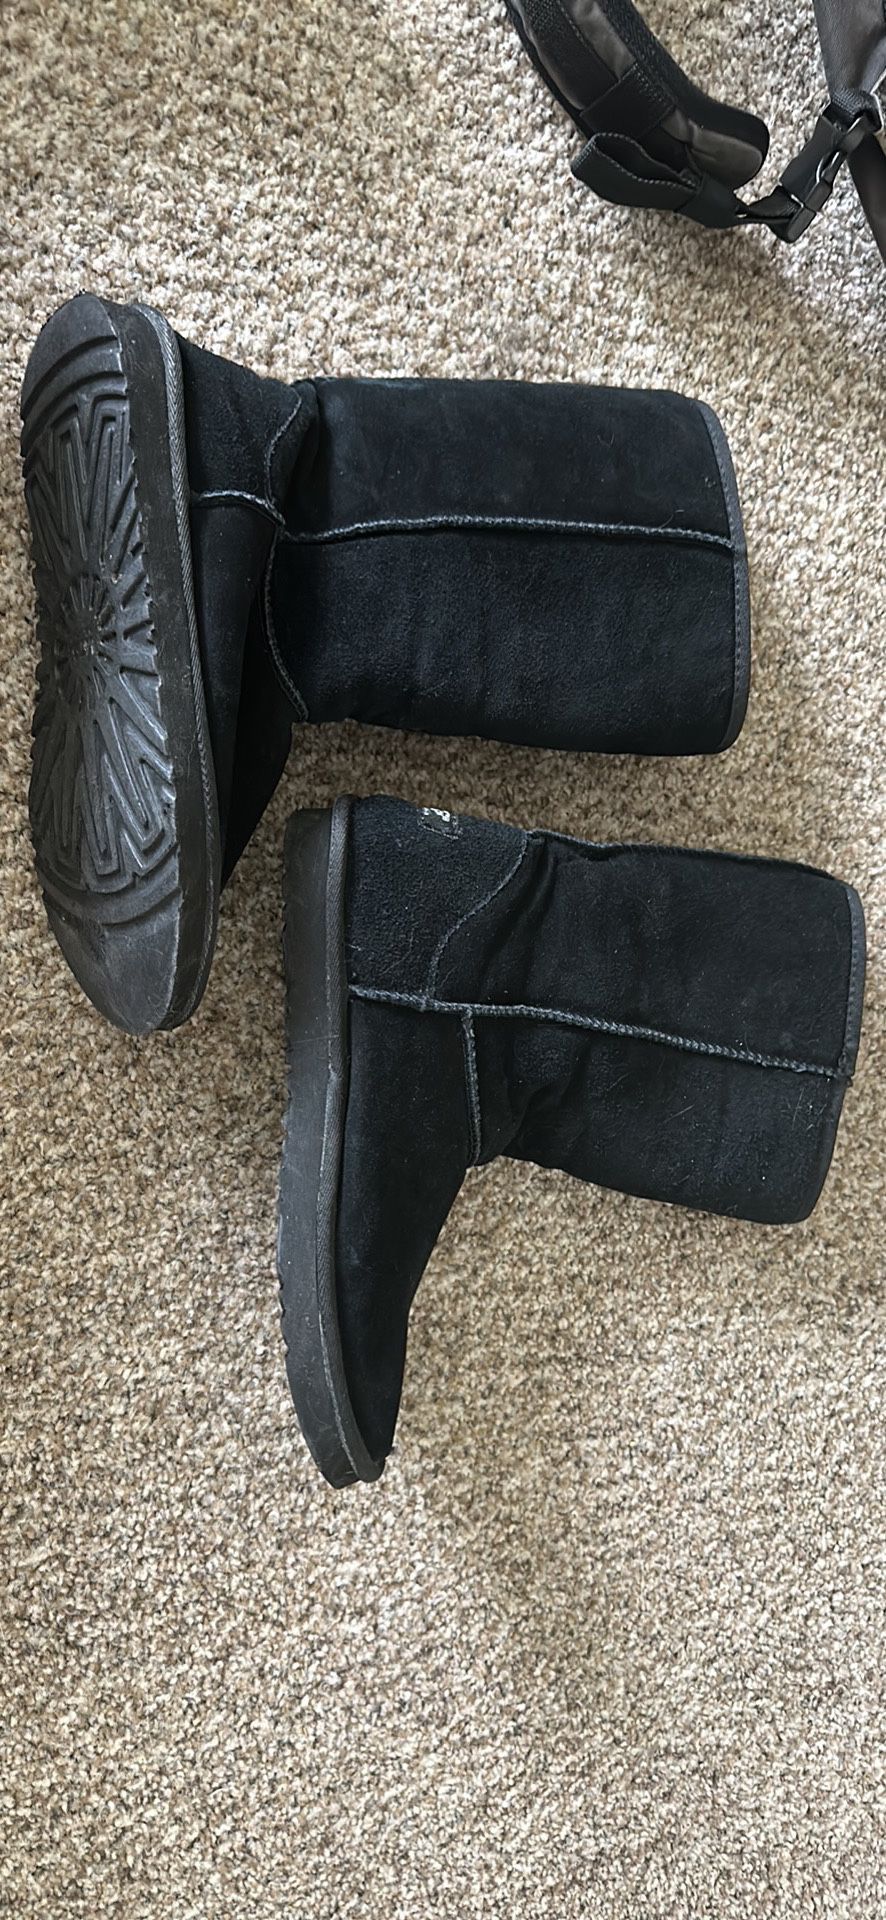 UGG Australia Black Boots S/N 5815 Leather Genuine Sheepskin Classic Tall US 10